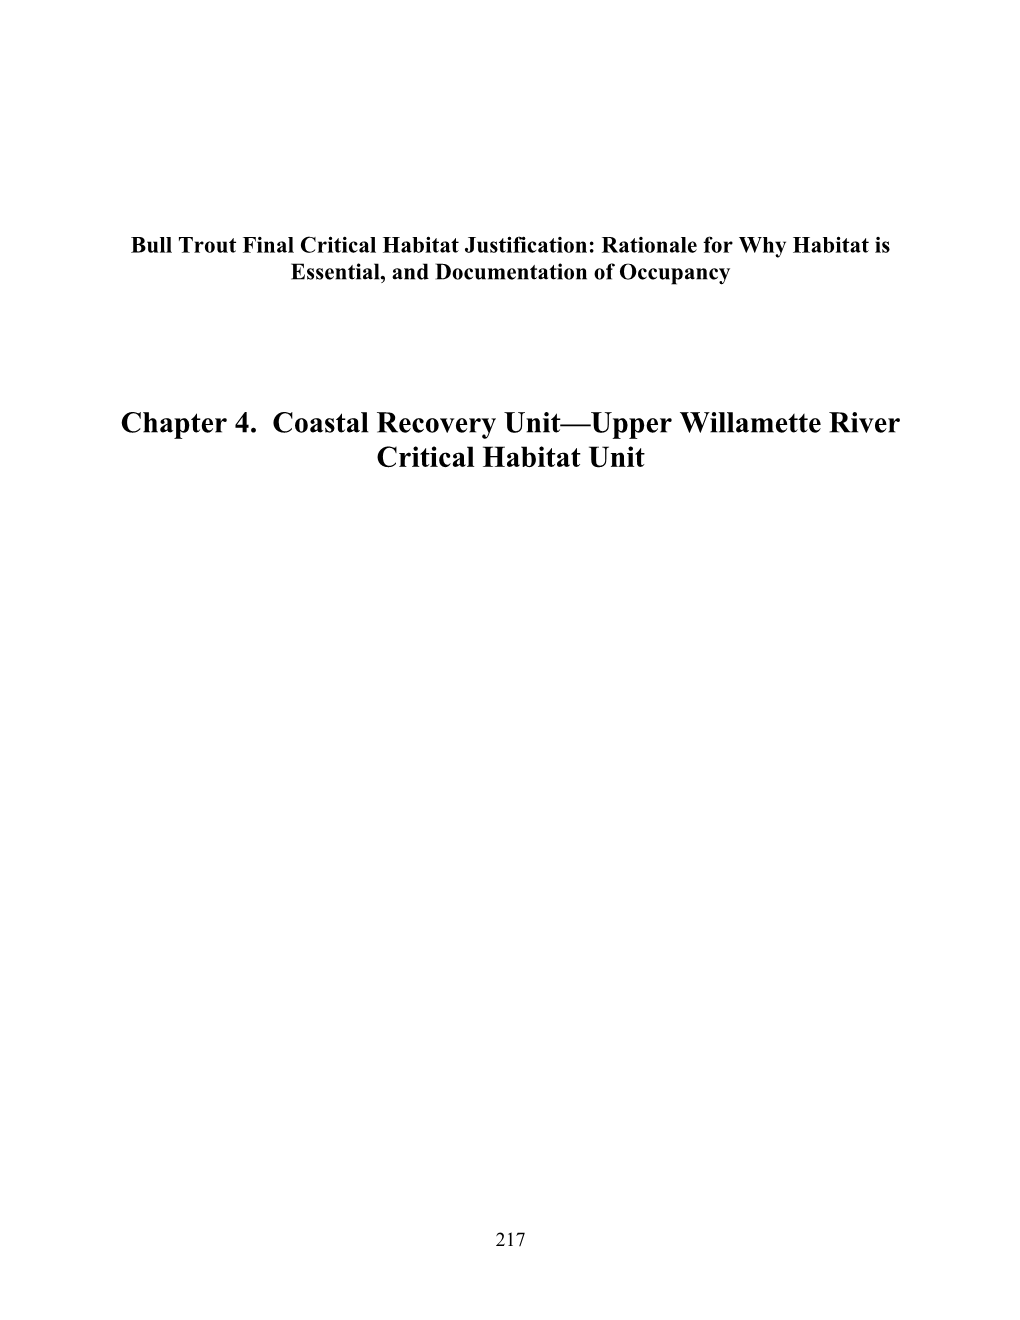 Chapter 4. Coastal Recovery Unit—Upper Willamette River Critical Habitat Unit